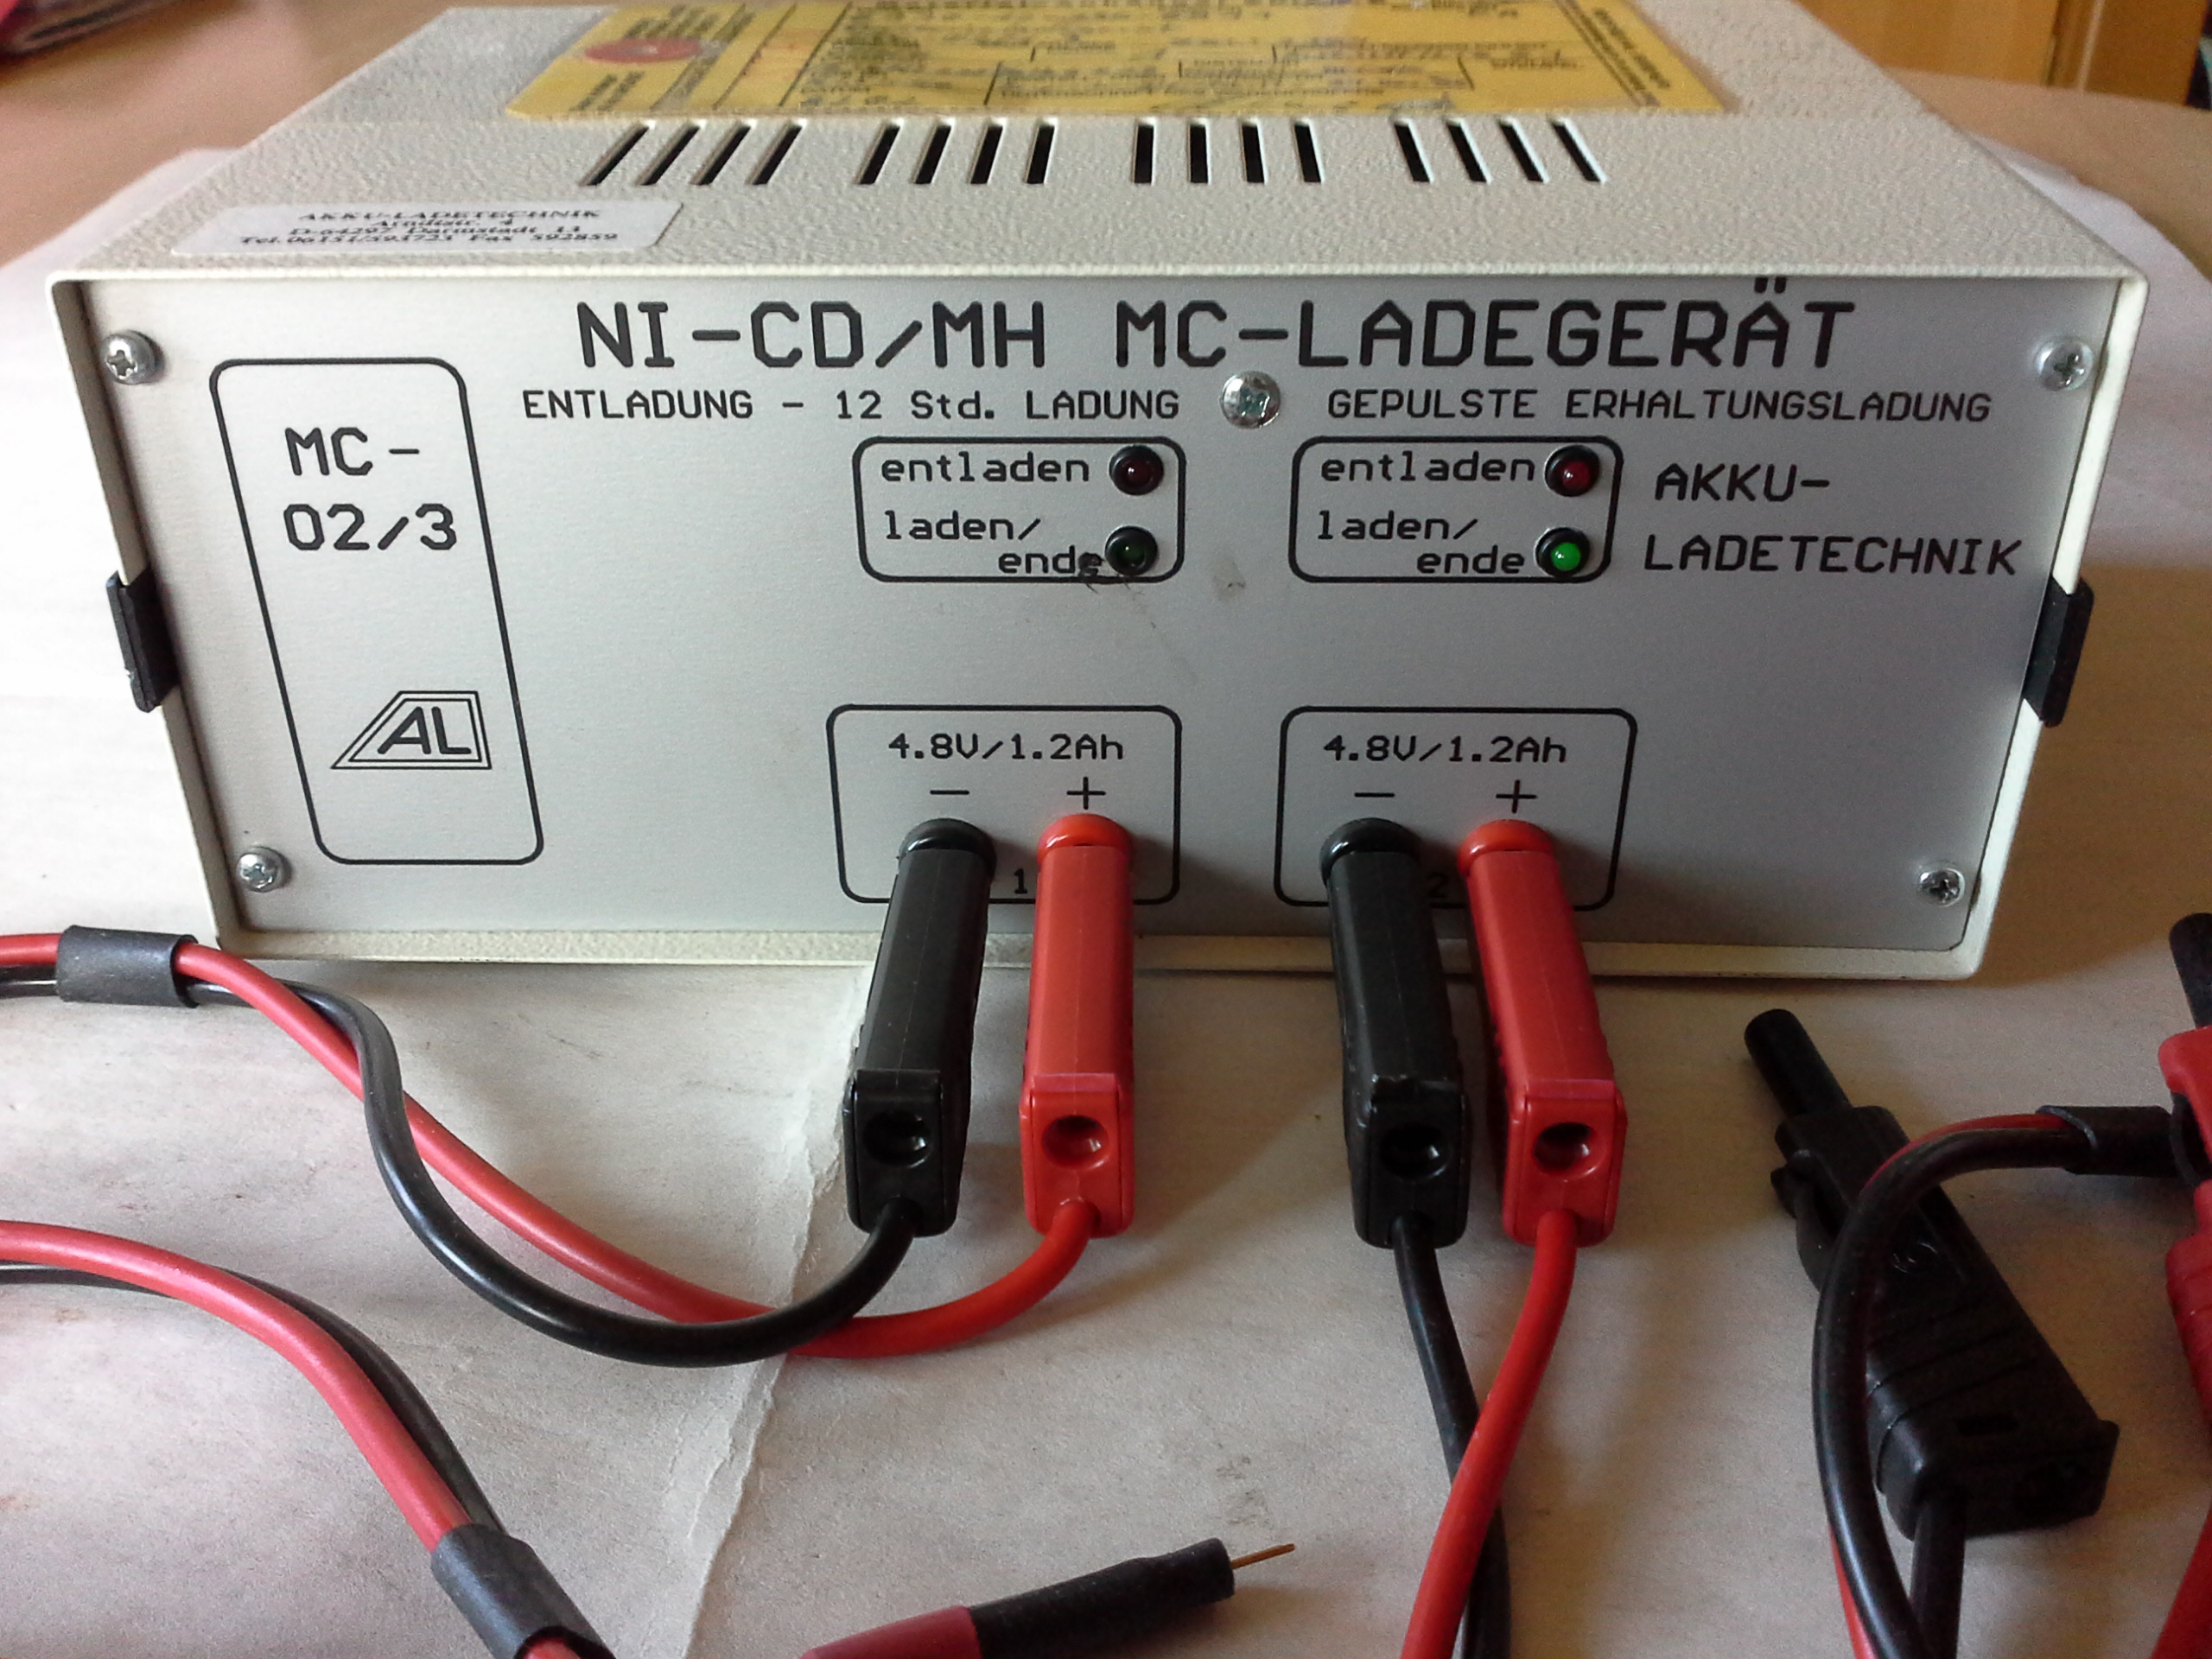 Ni-CD/MH Batterieladegerät MC02/3